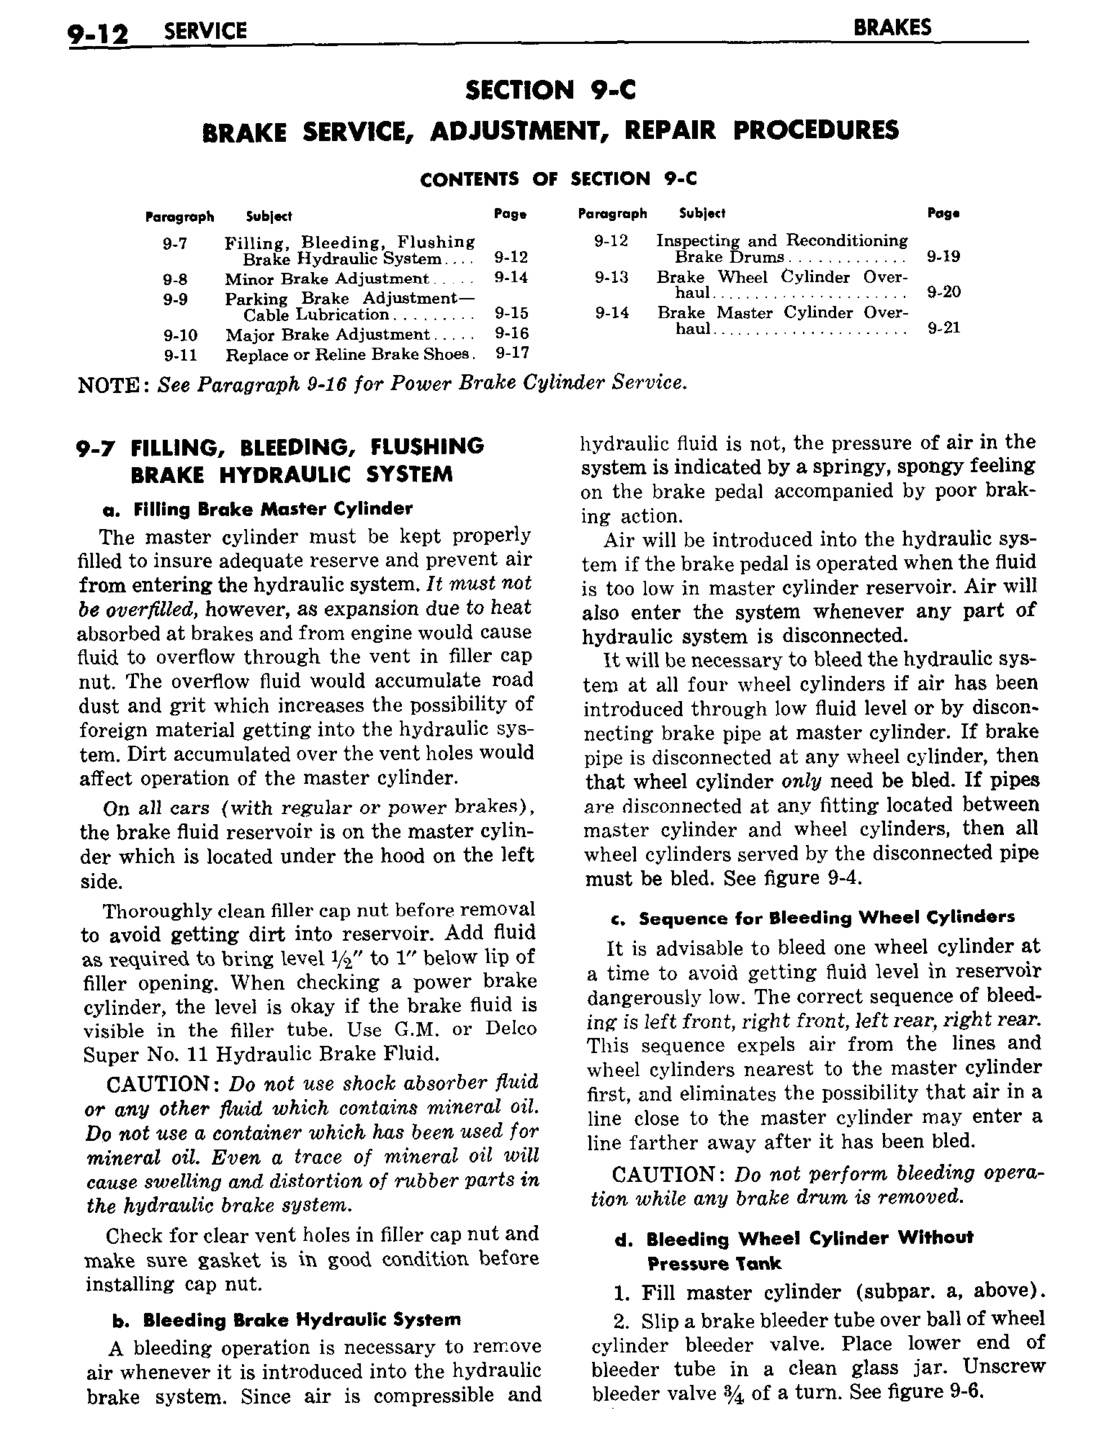 n_10 1959 Buick Shop Manual - Brakes-012-012.jpg